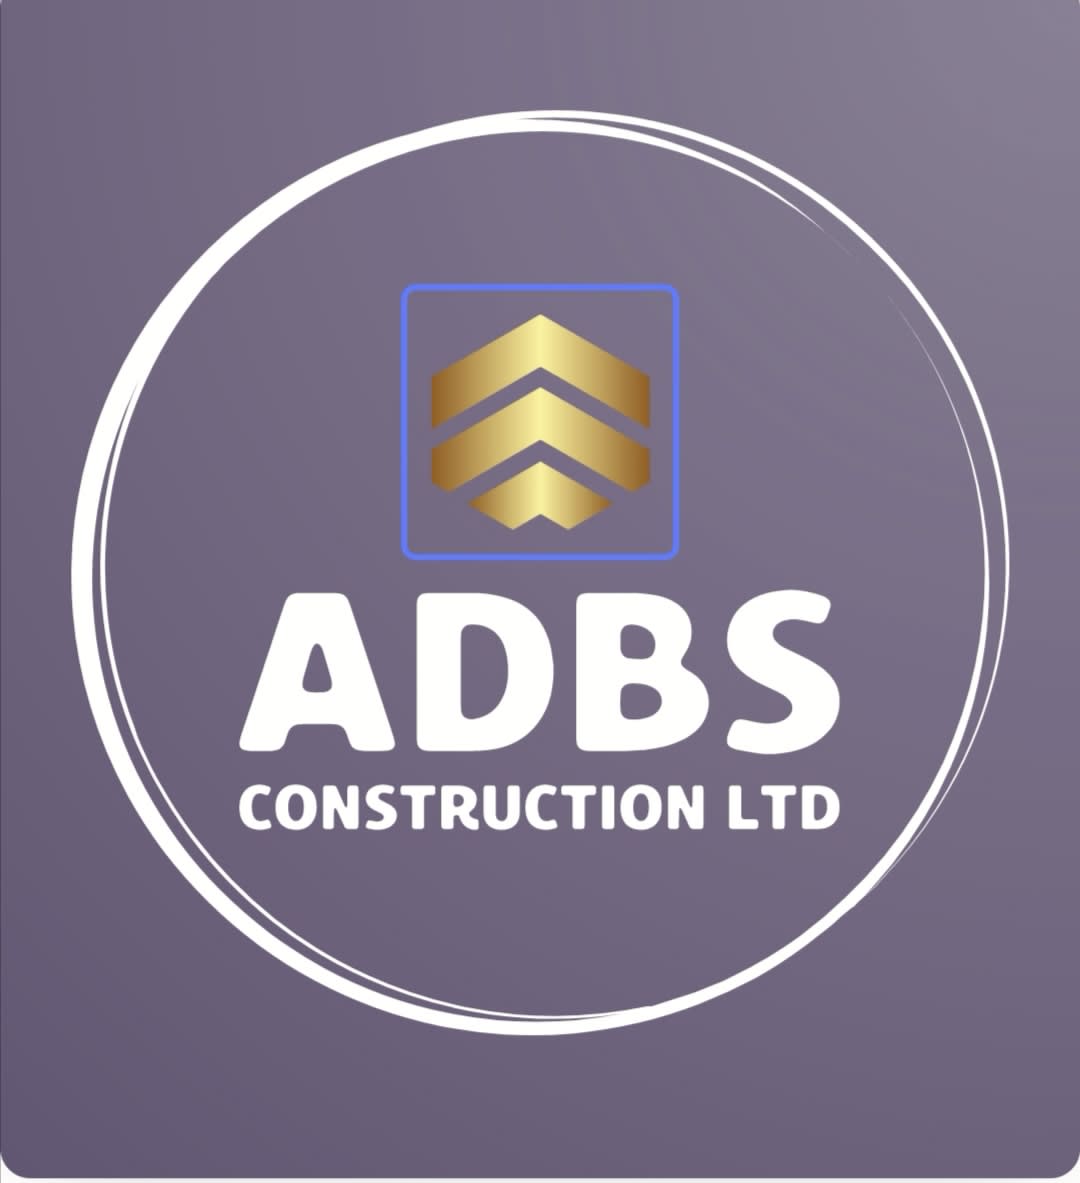 ADBS Construction